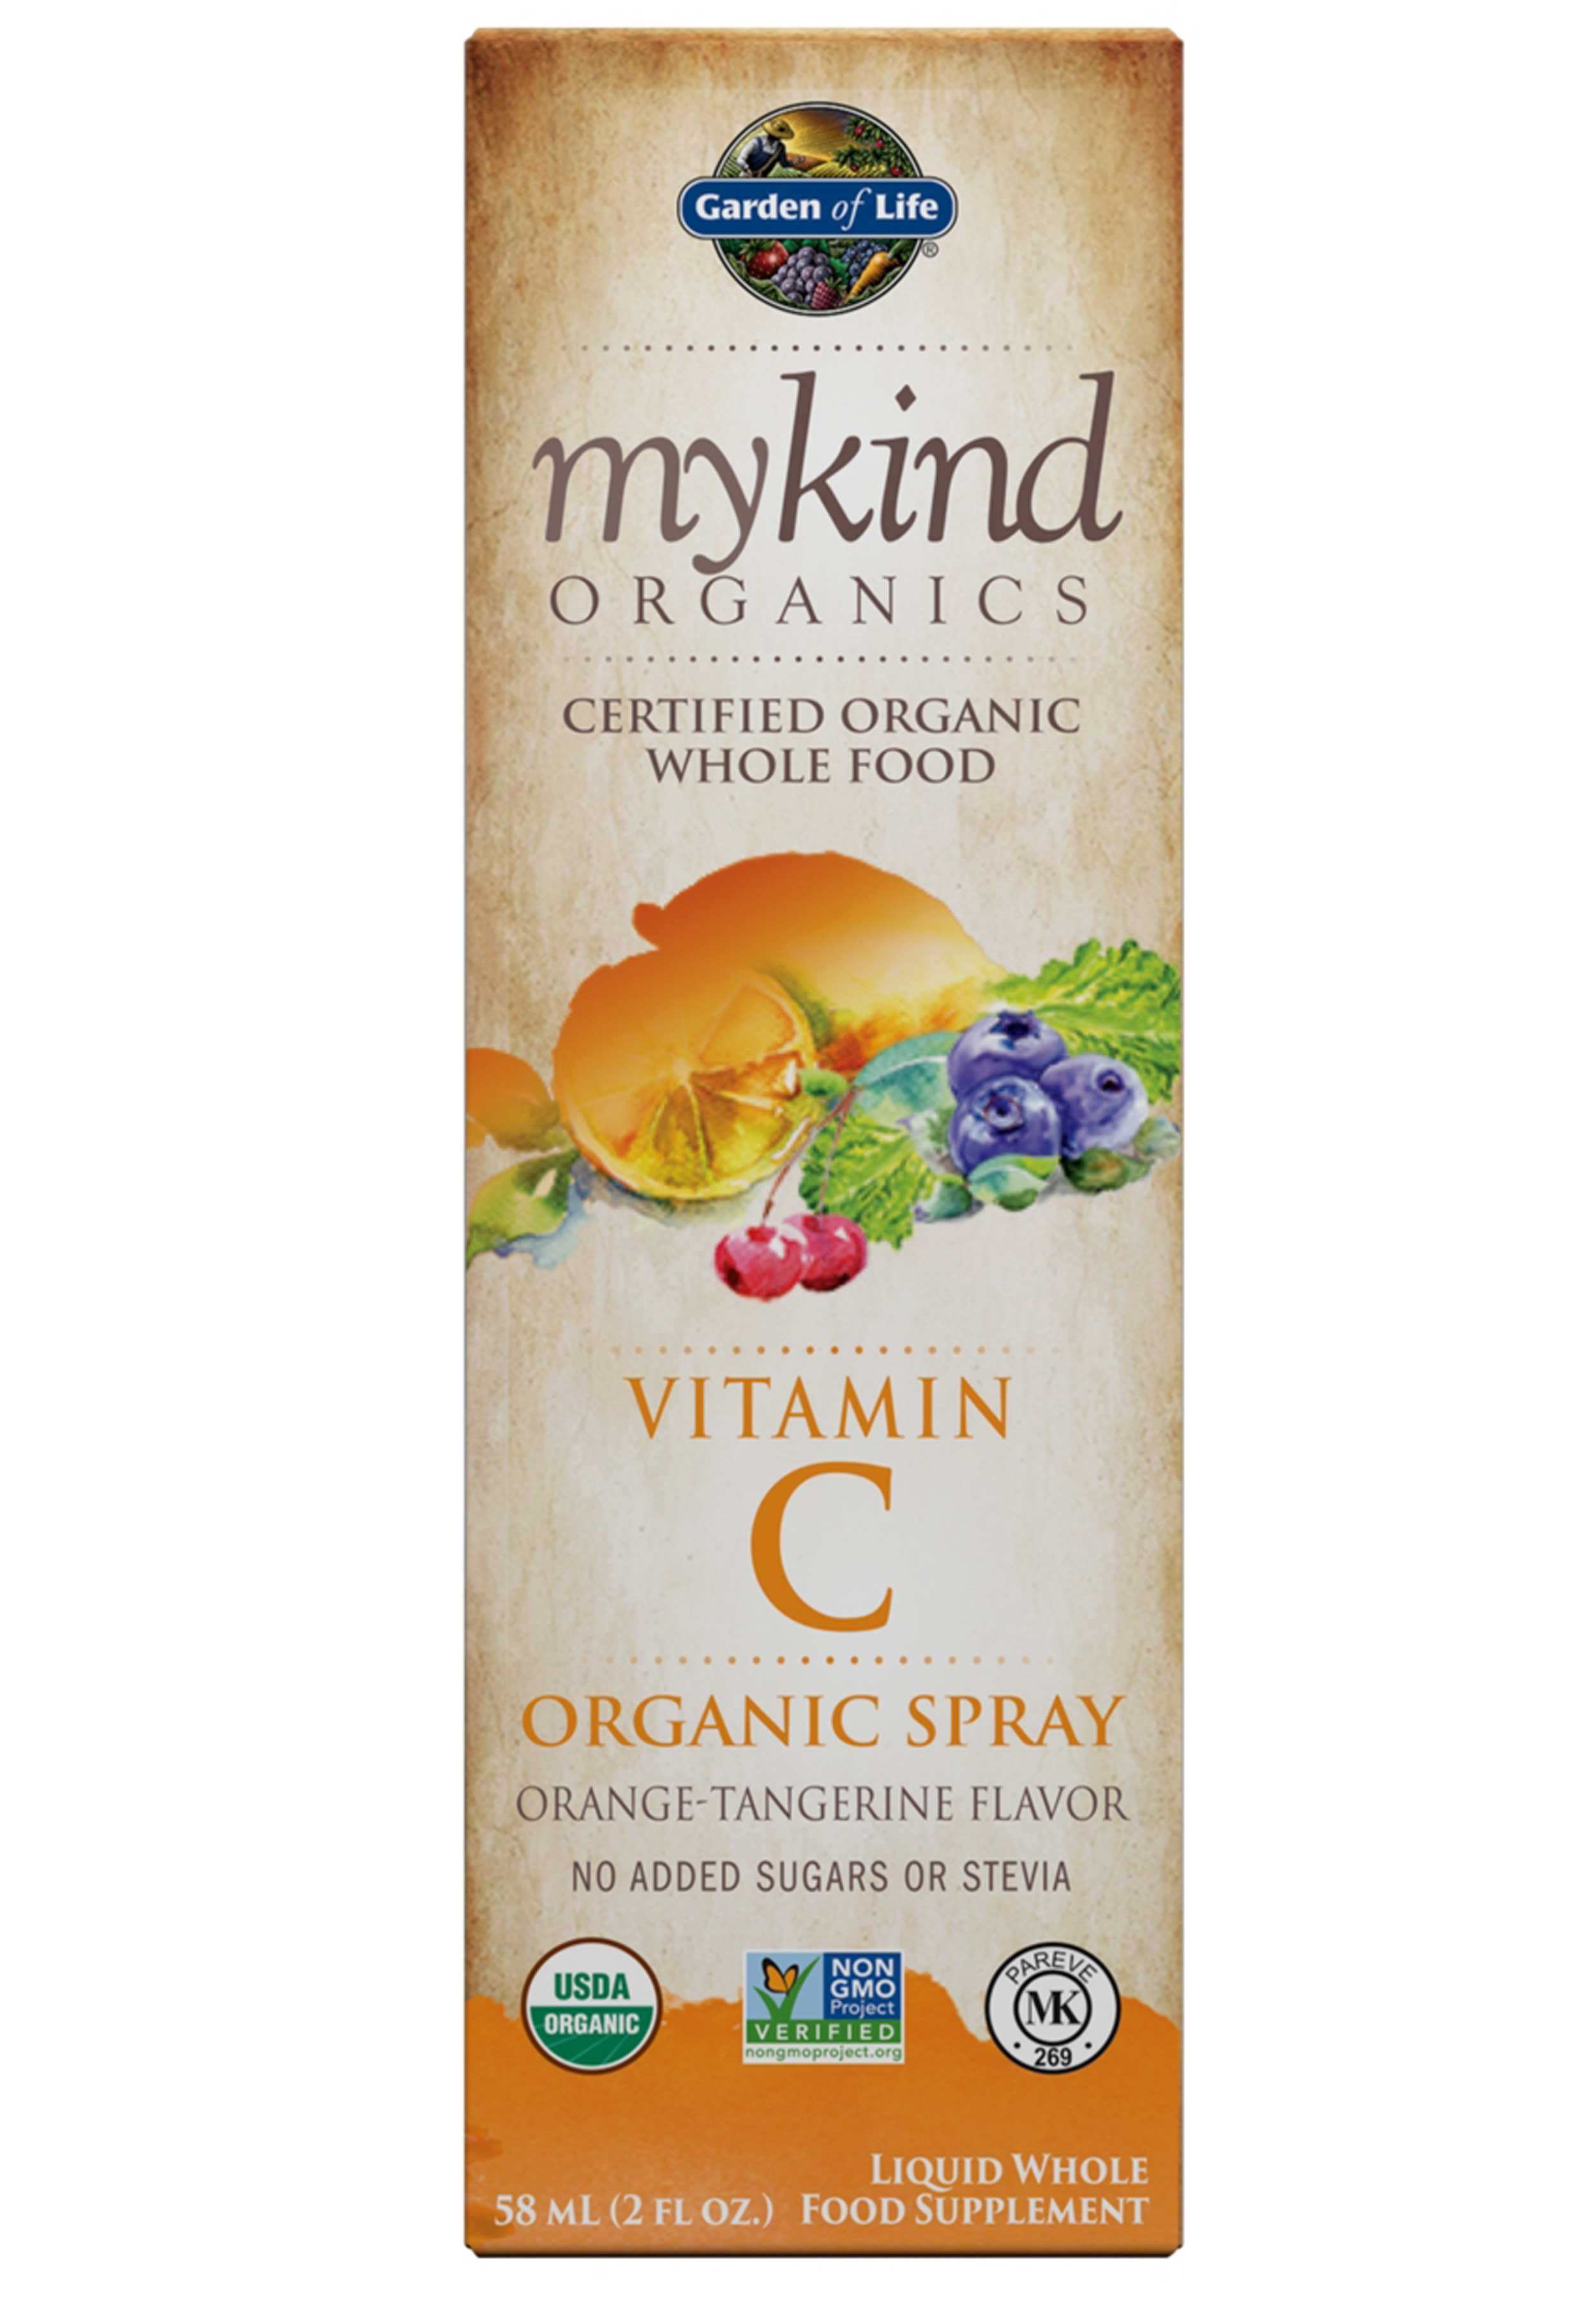 Garden of Life mykind Organics Vitamin C Organic Spray Ingredients